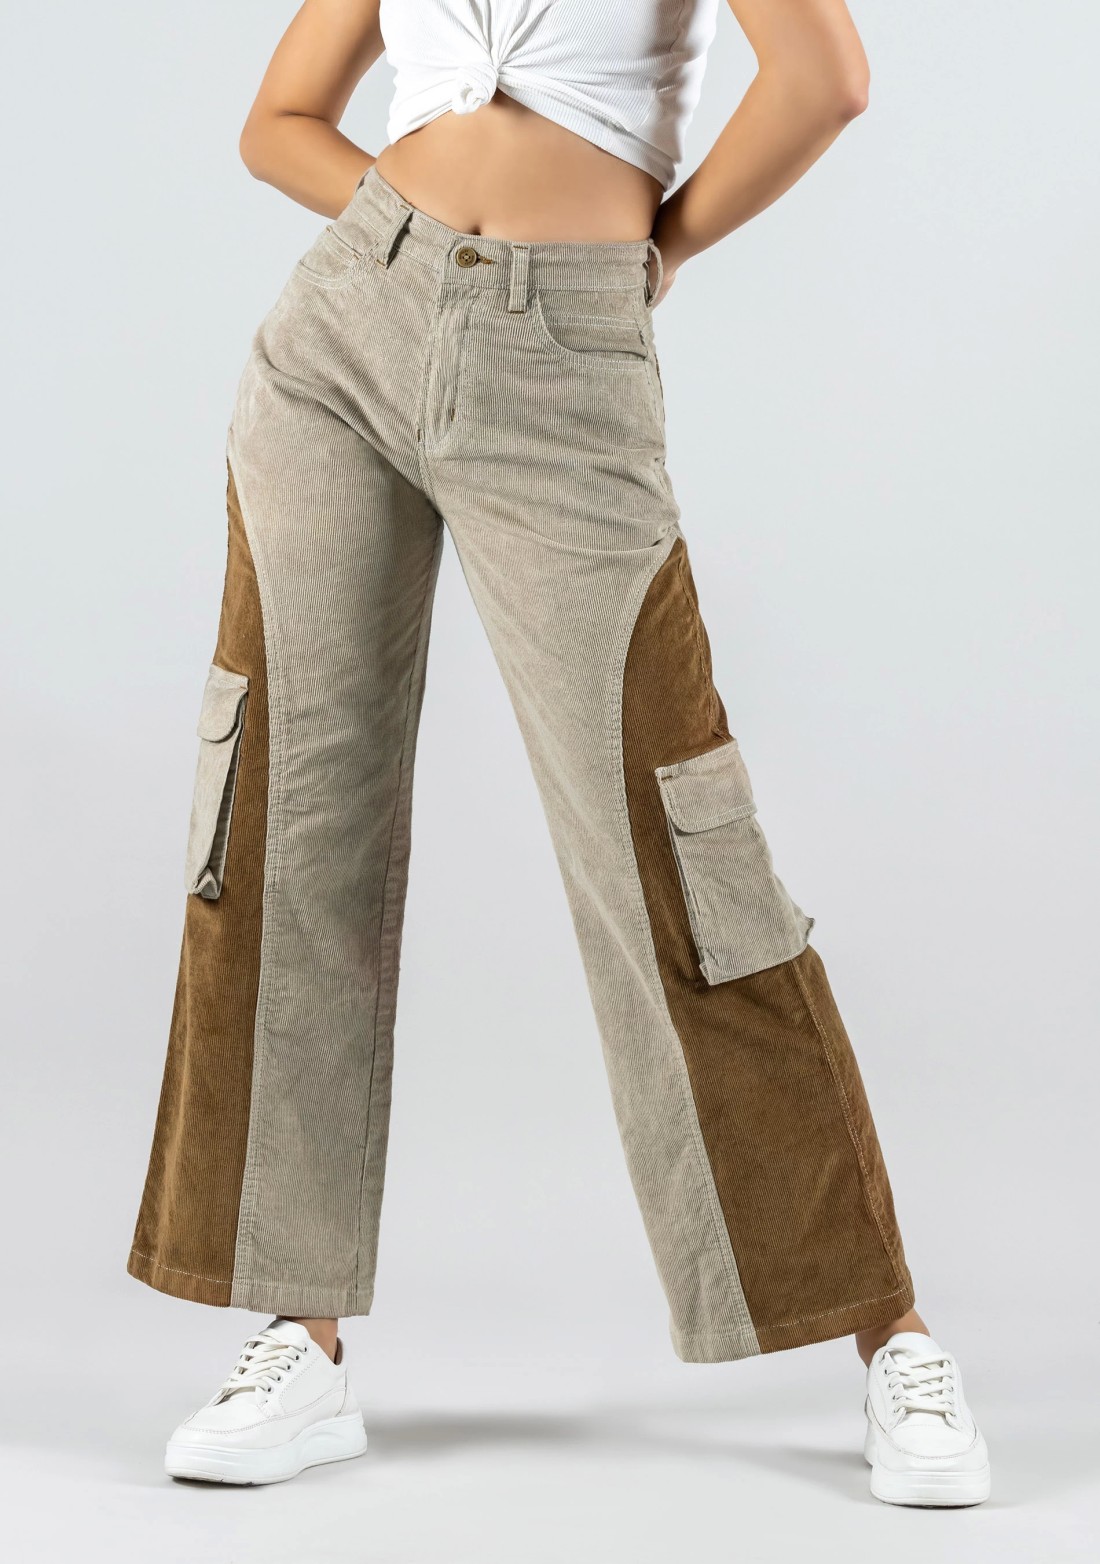 Khaki Cargos Trousers - Buy Khaki Cargos Trousers online in India